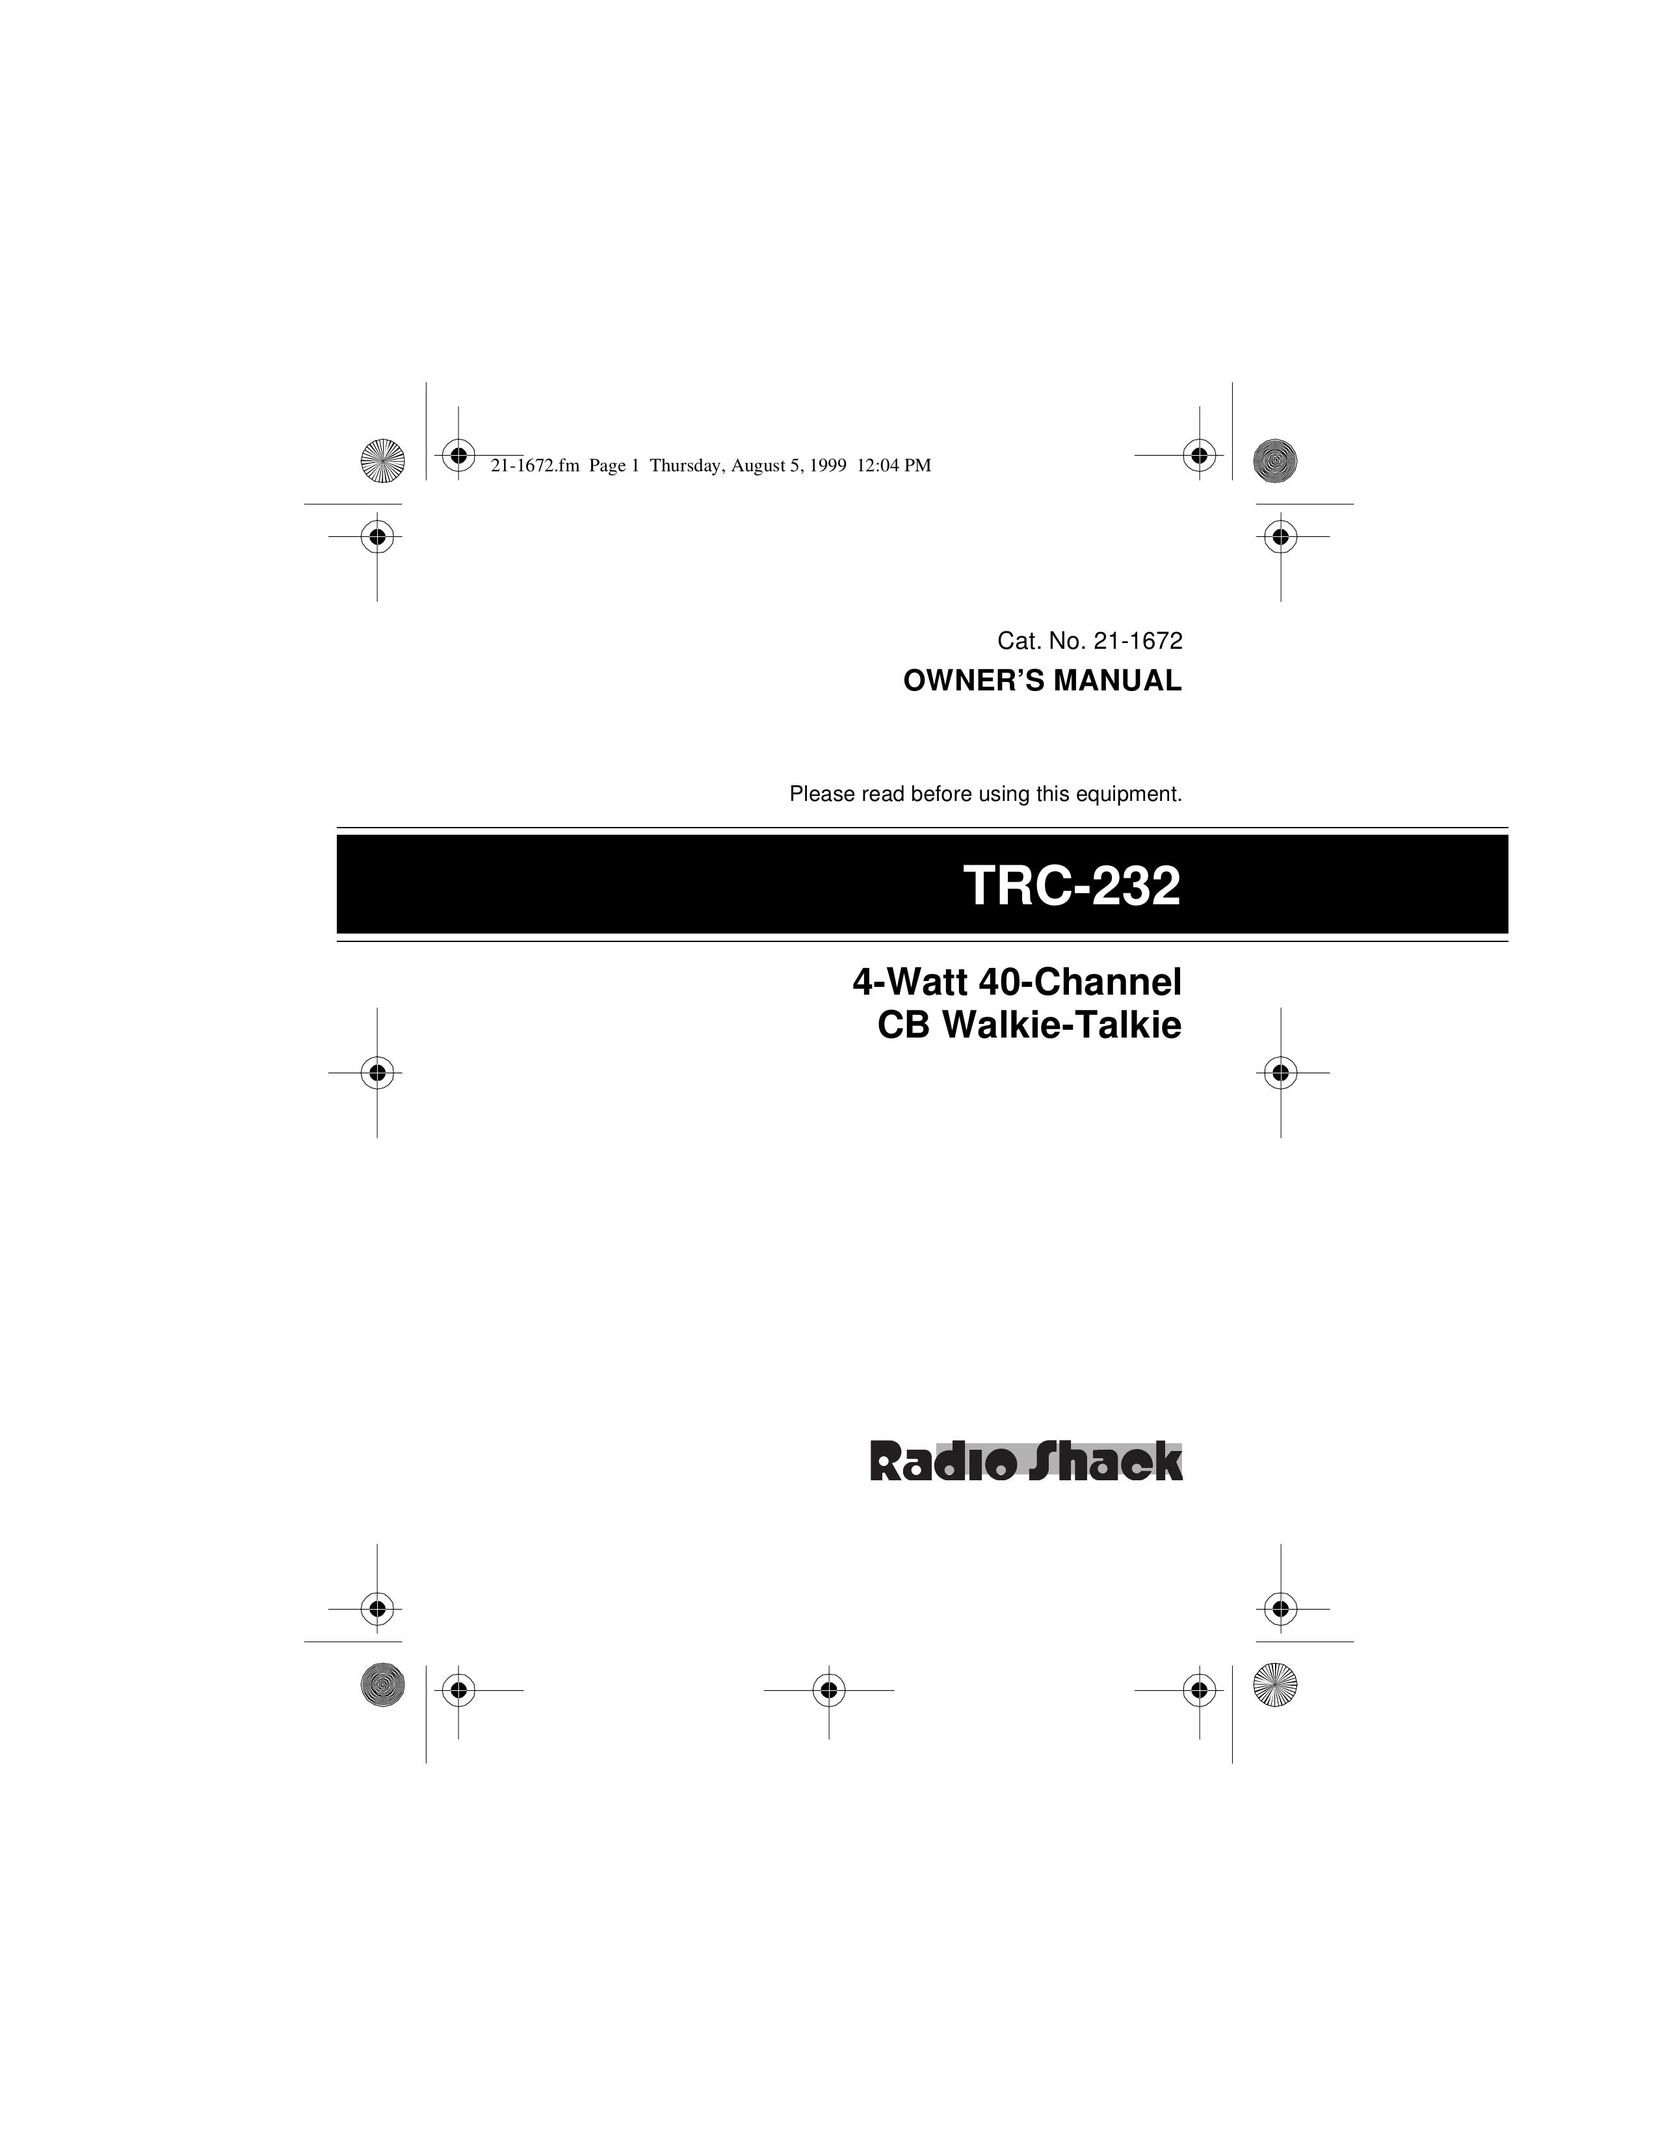 Radio Shack TRC-232 Two-Way Radio User Manual